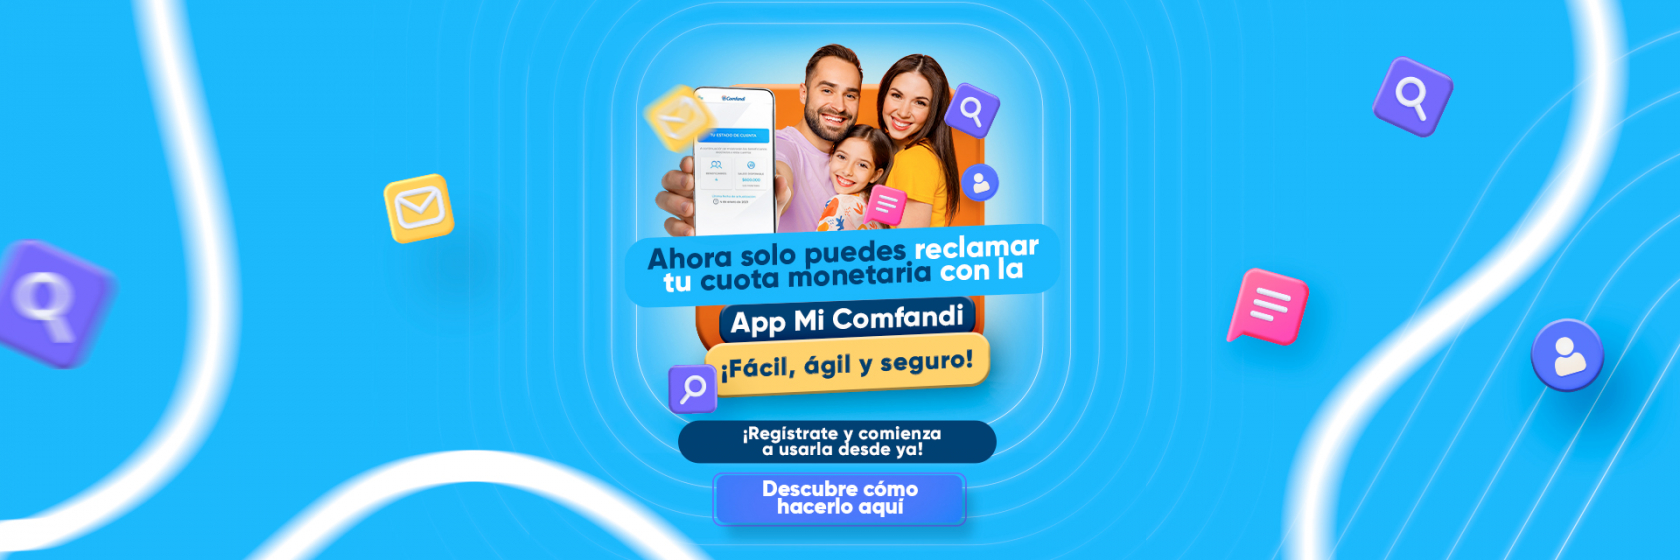 banner app comfandi identidad digital 